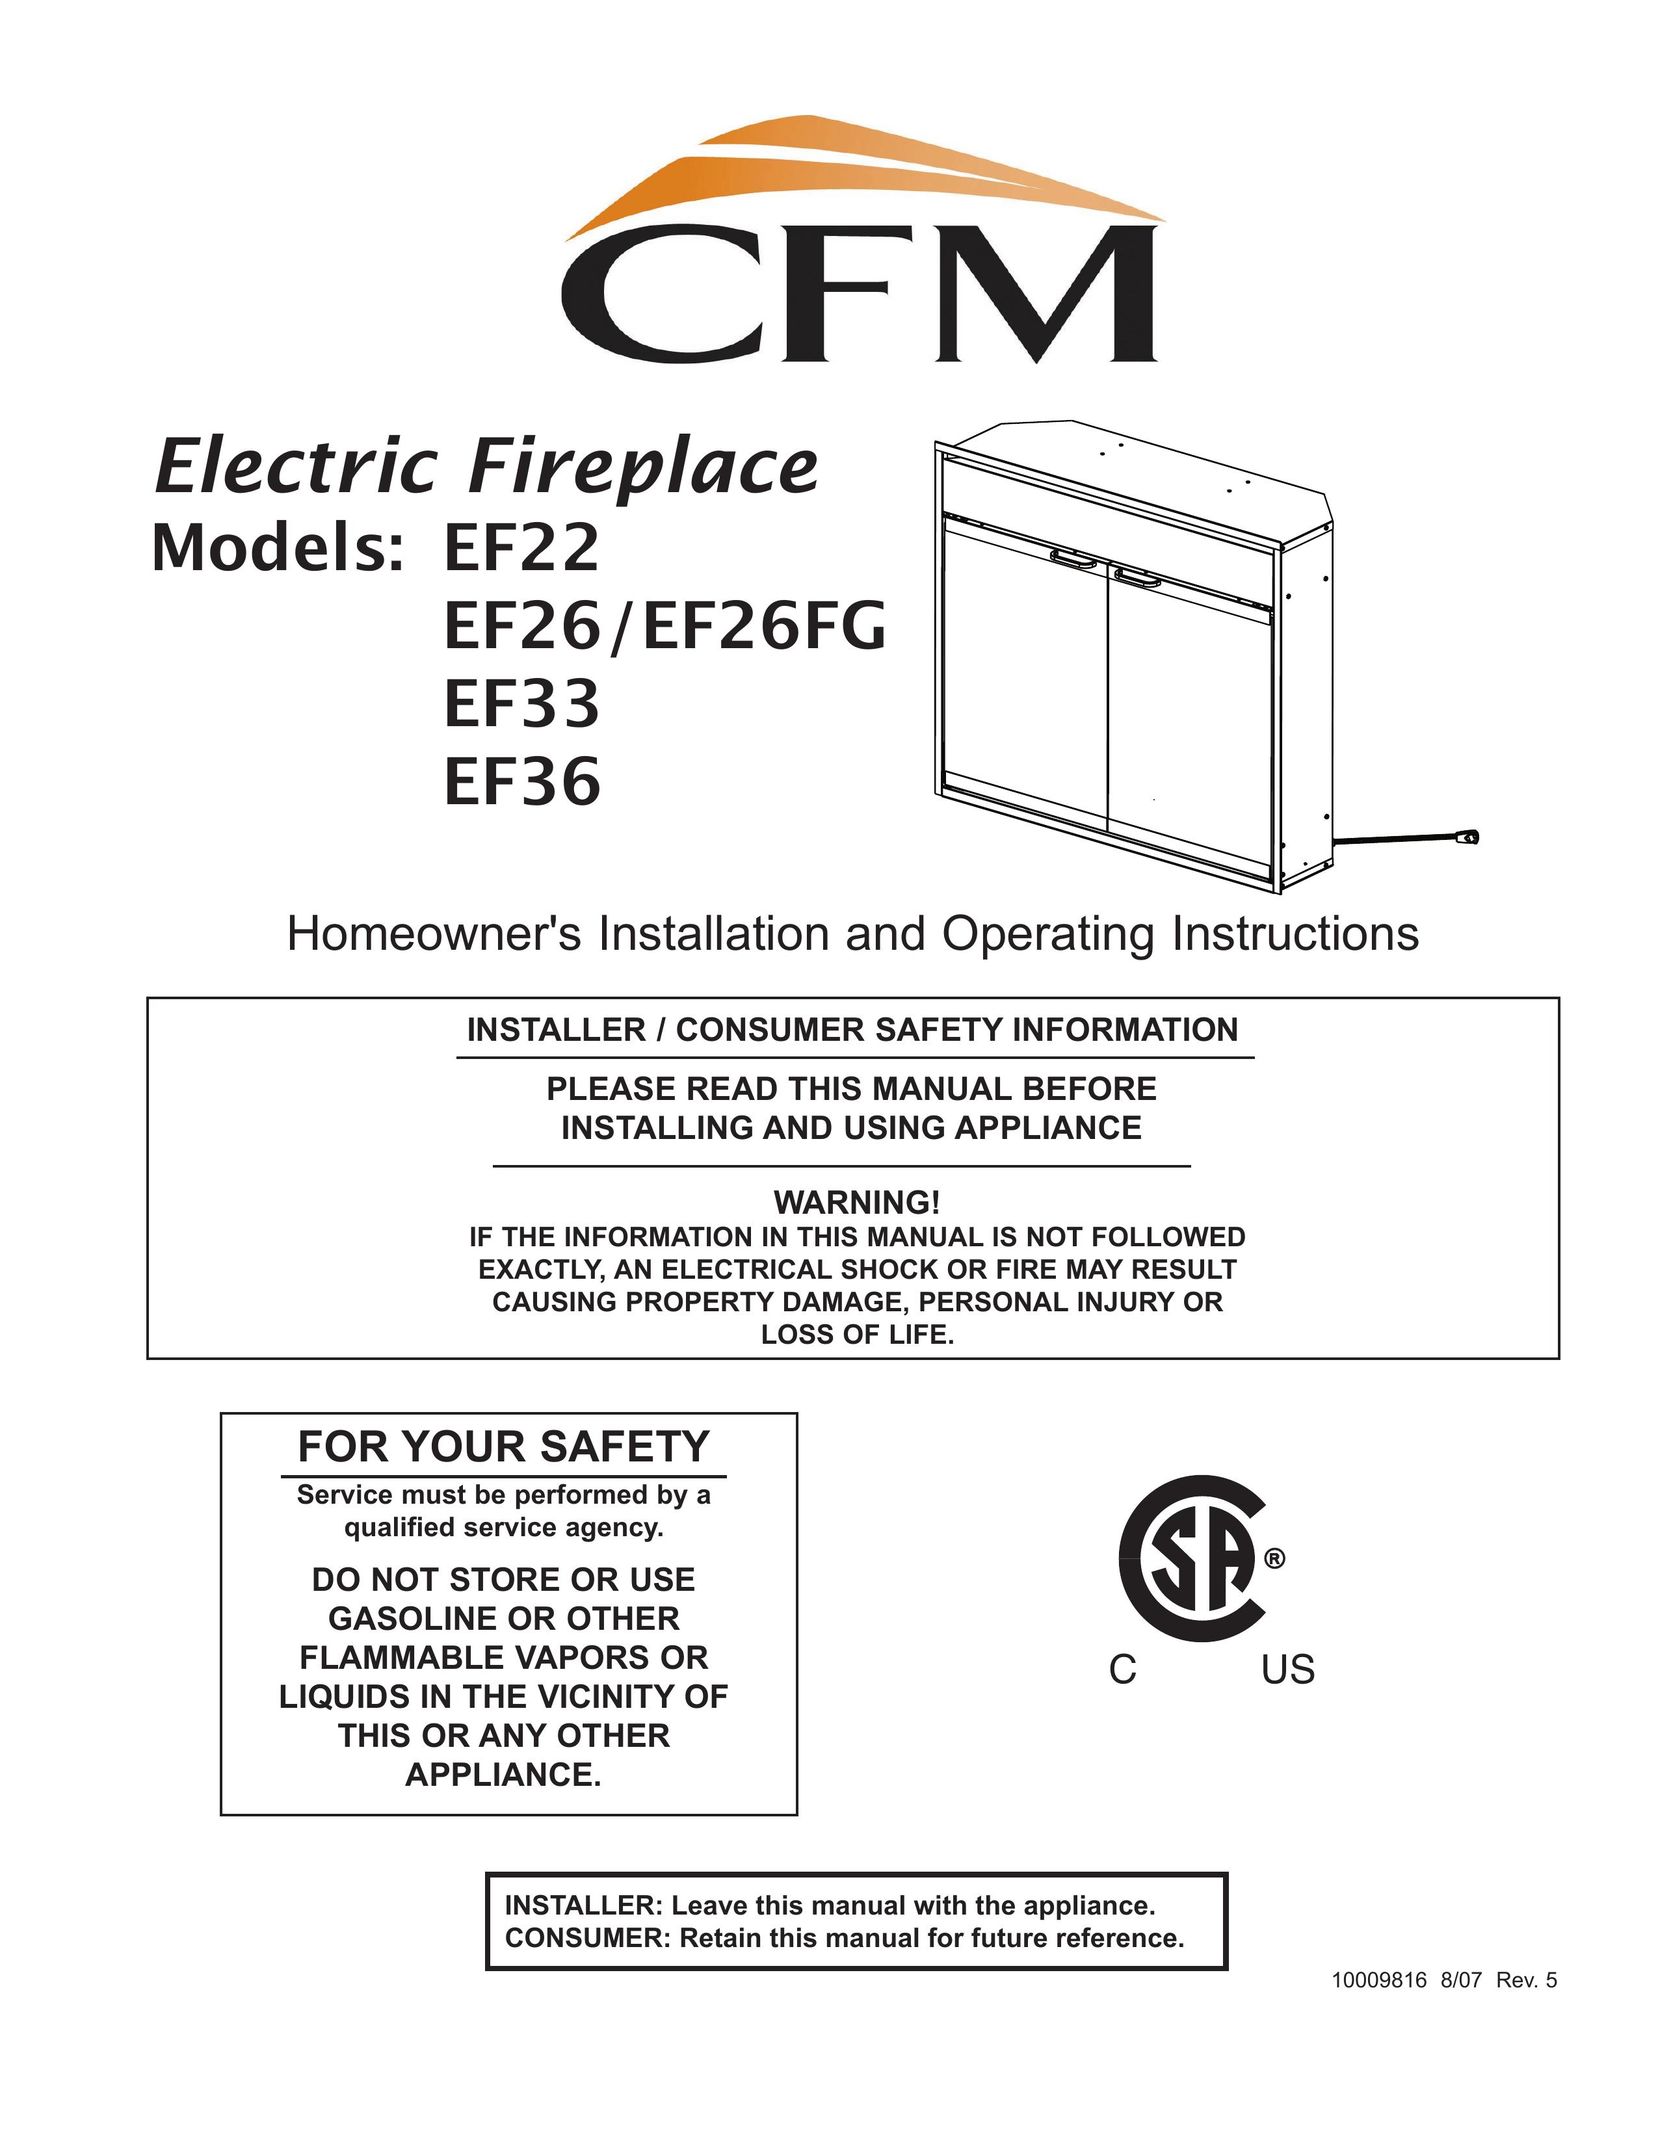 CFM Corporation EF26 Indoor Fireplace User Manual